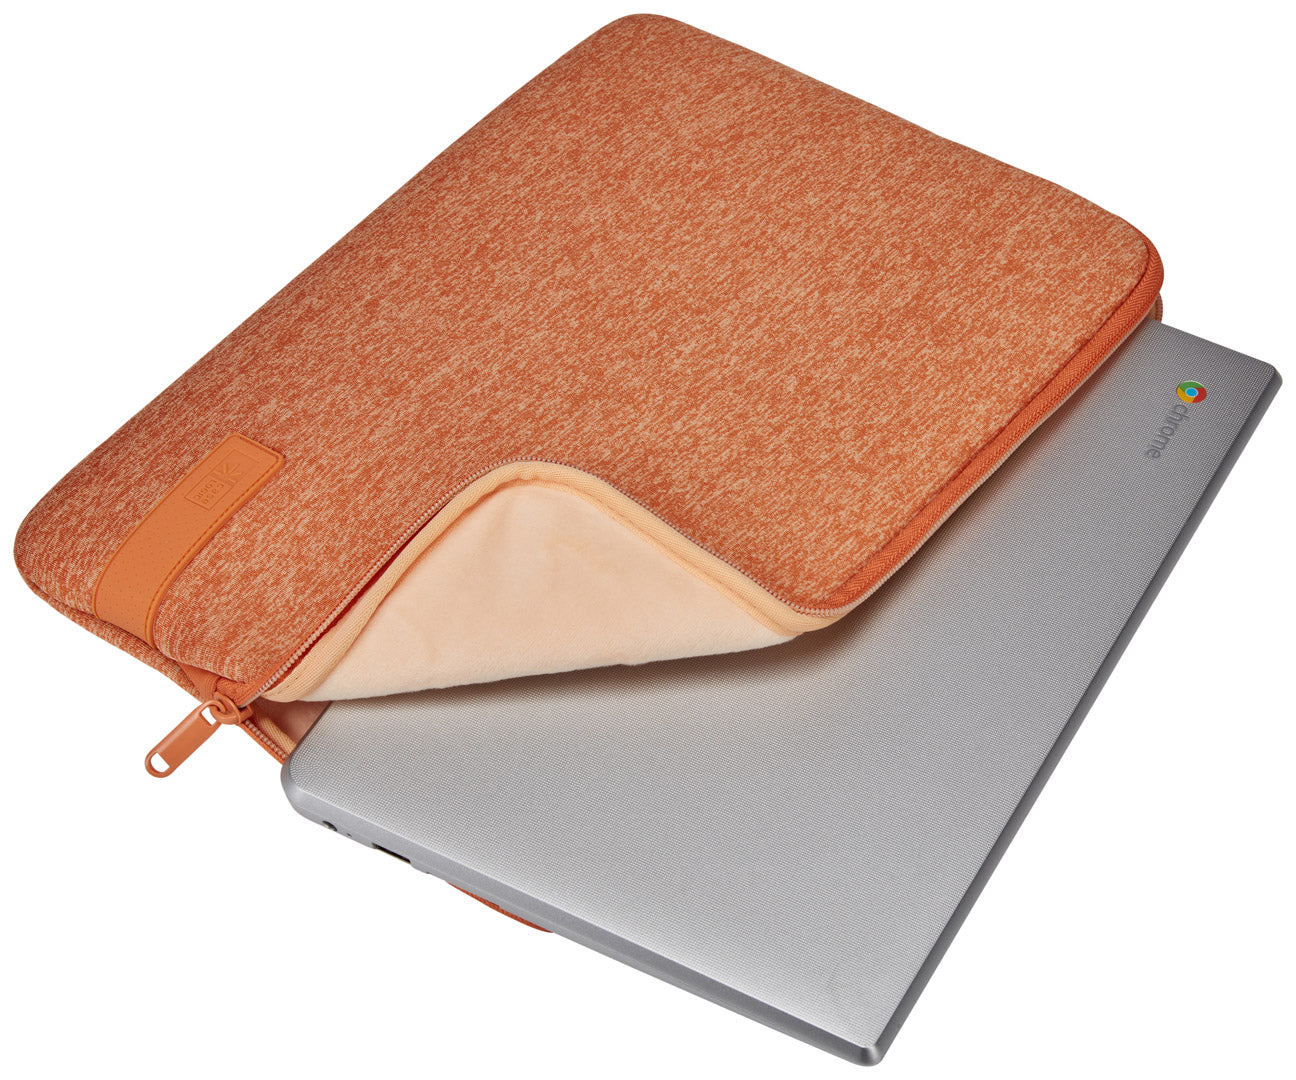 Case Logic 4692 Reflect Laptop Sleeve 13.3 REFPC-113 Coral Gold/Apricot